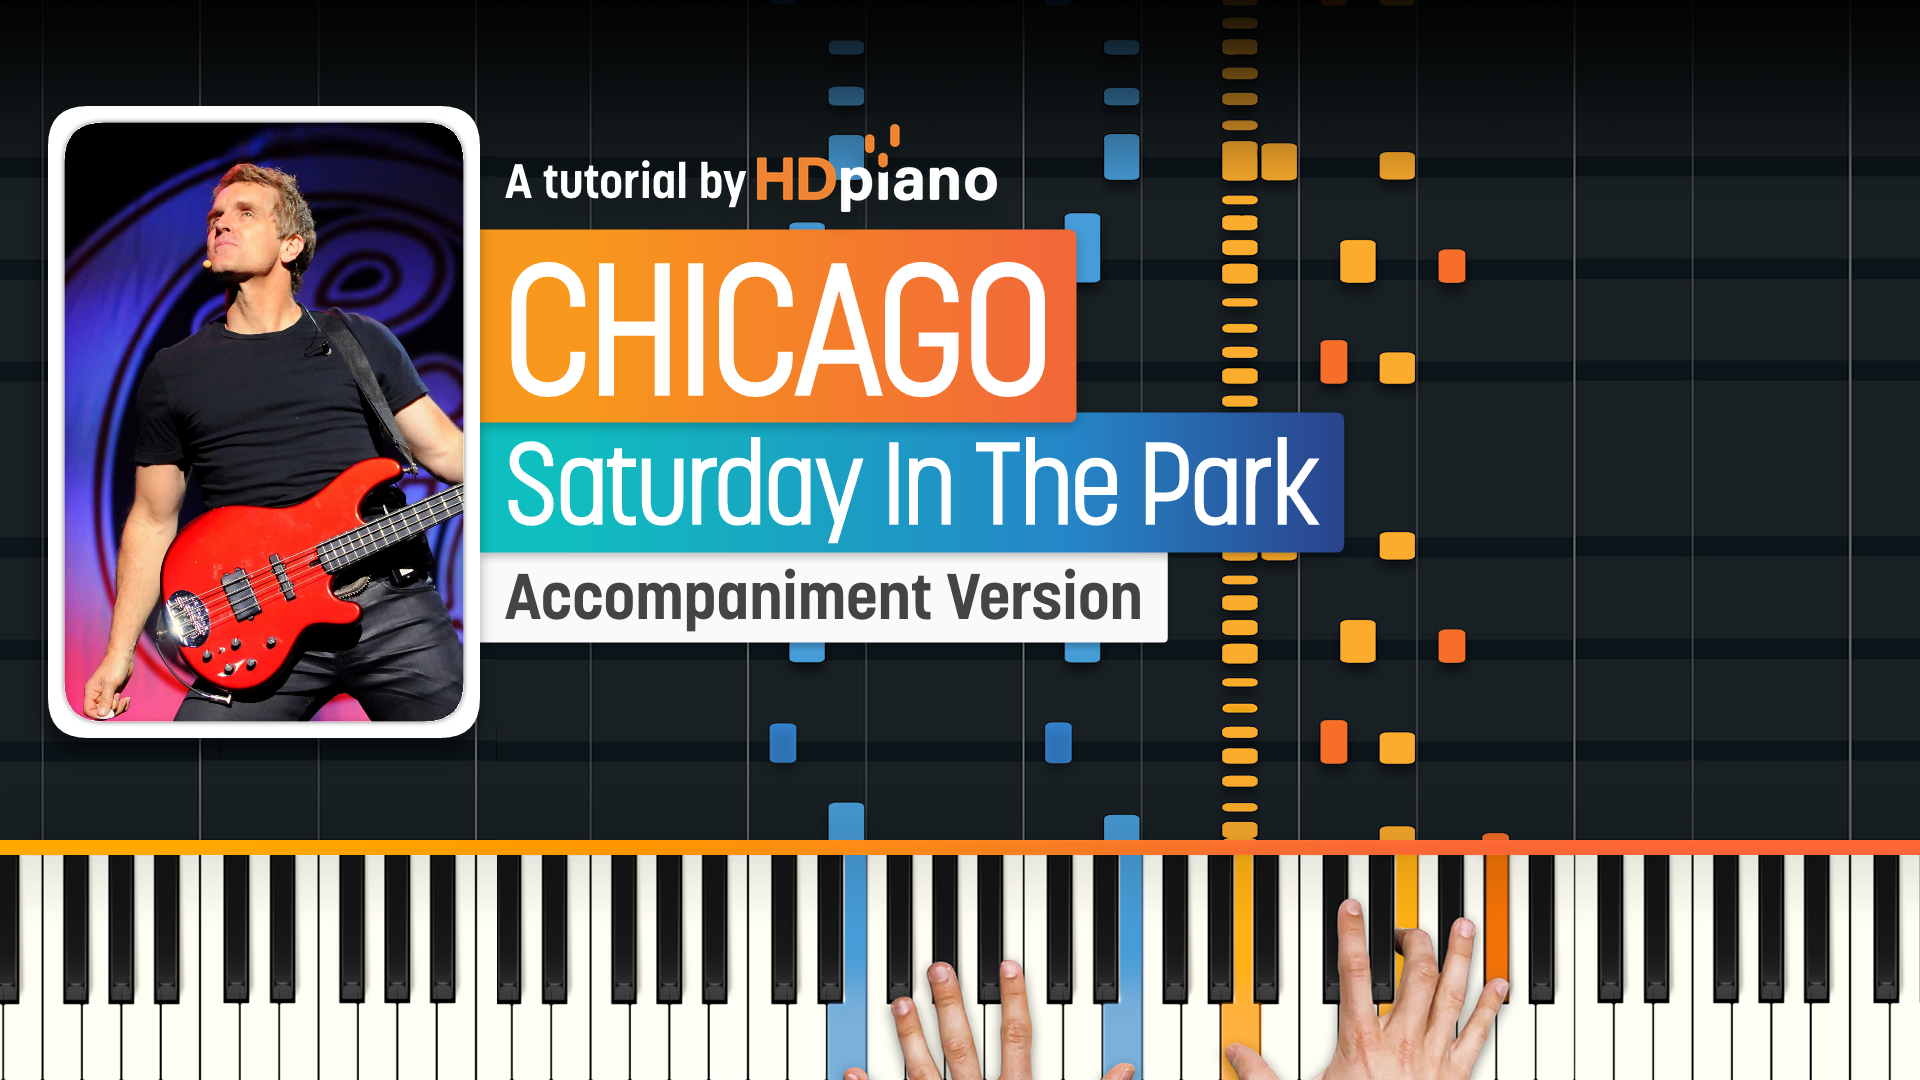 Saturday in the Park by Chicago Piano Tutorial HDpiano